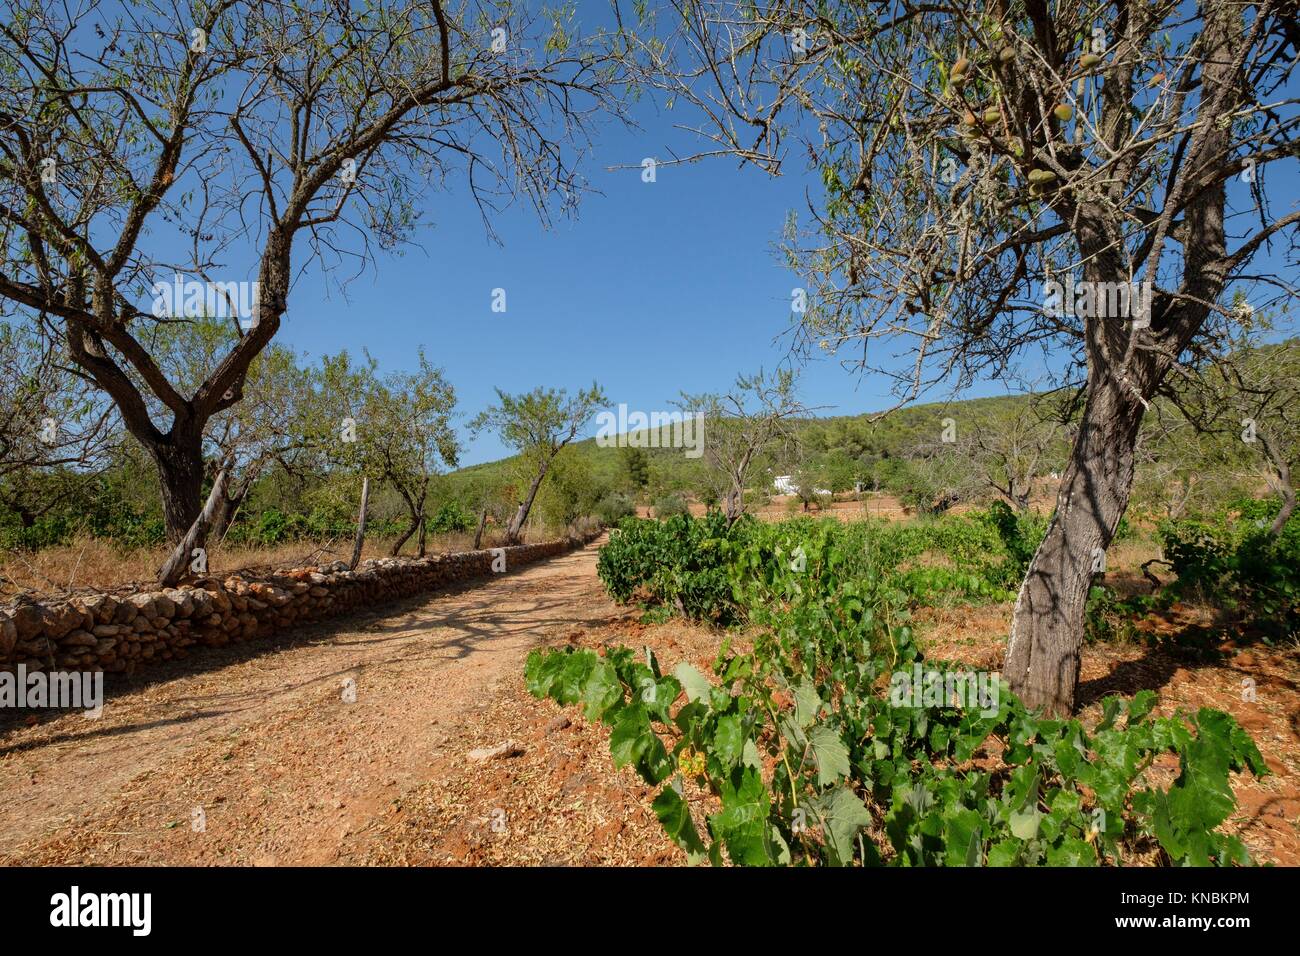 Viña de cepa baja (corpo bassa vigneti), Ets Amunts, Ibiza, Isole Baleari, Spagna. Foto Stock